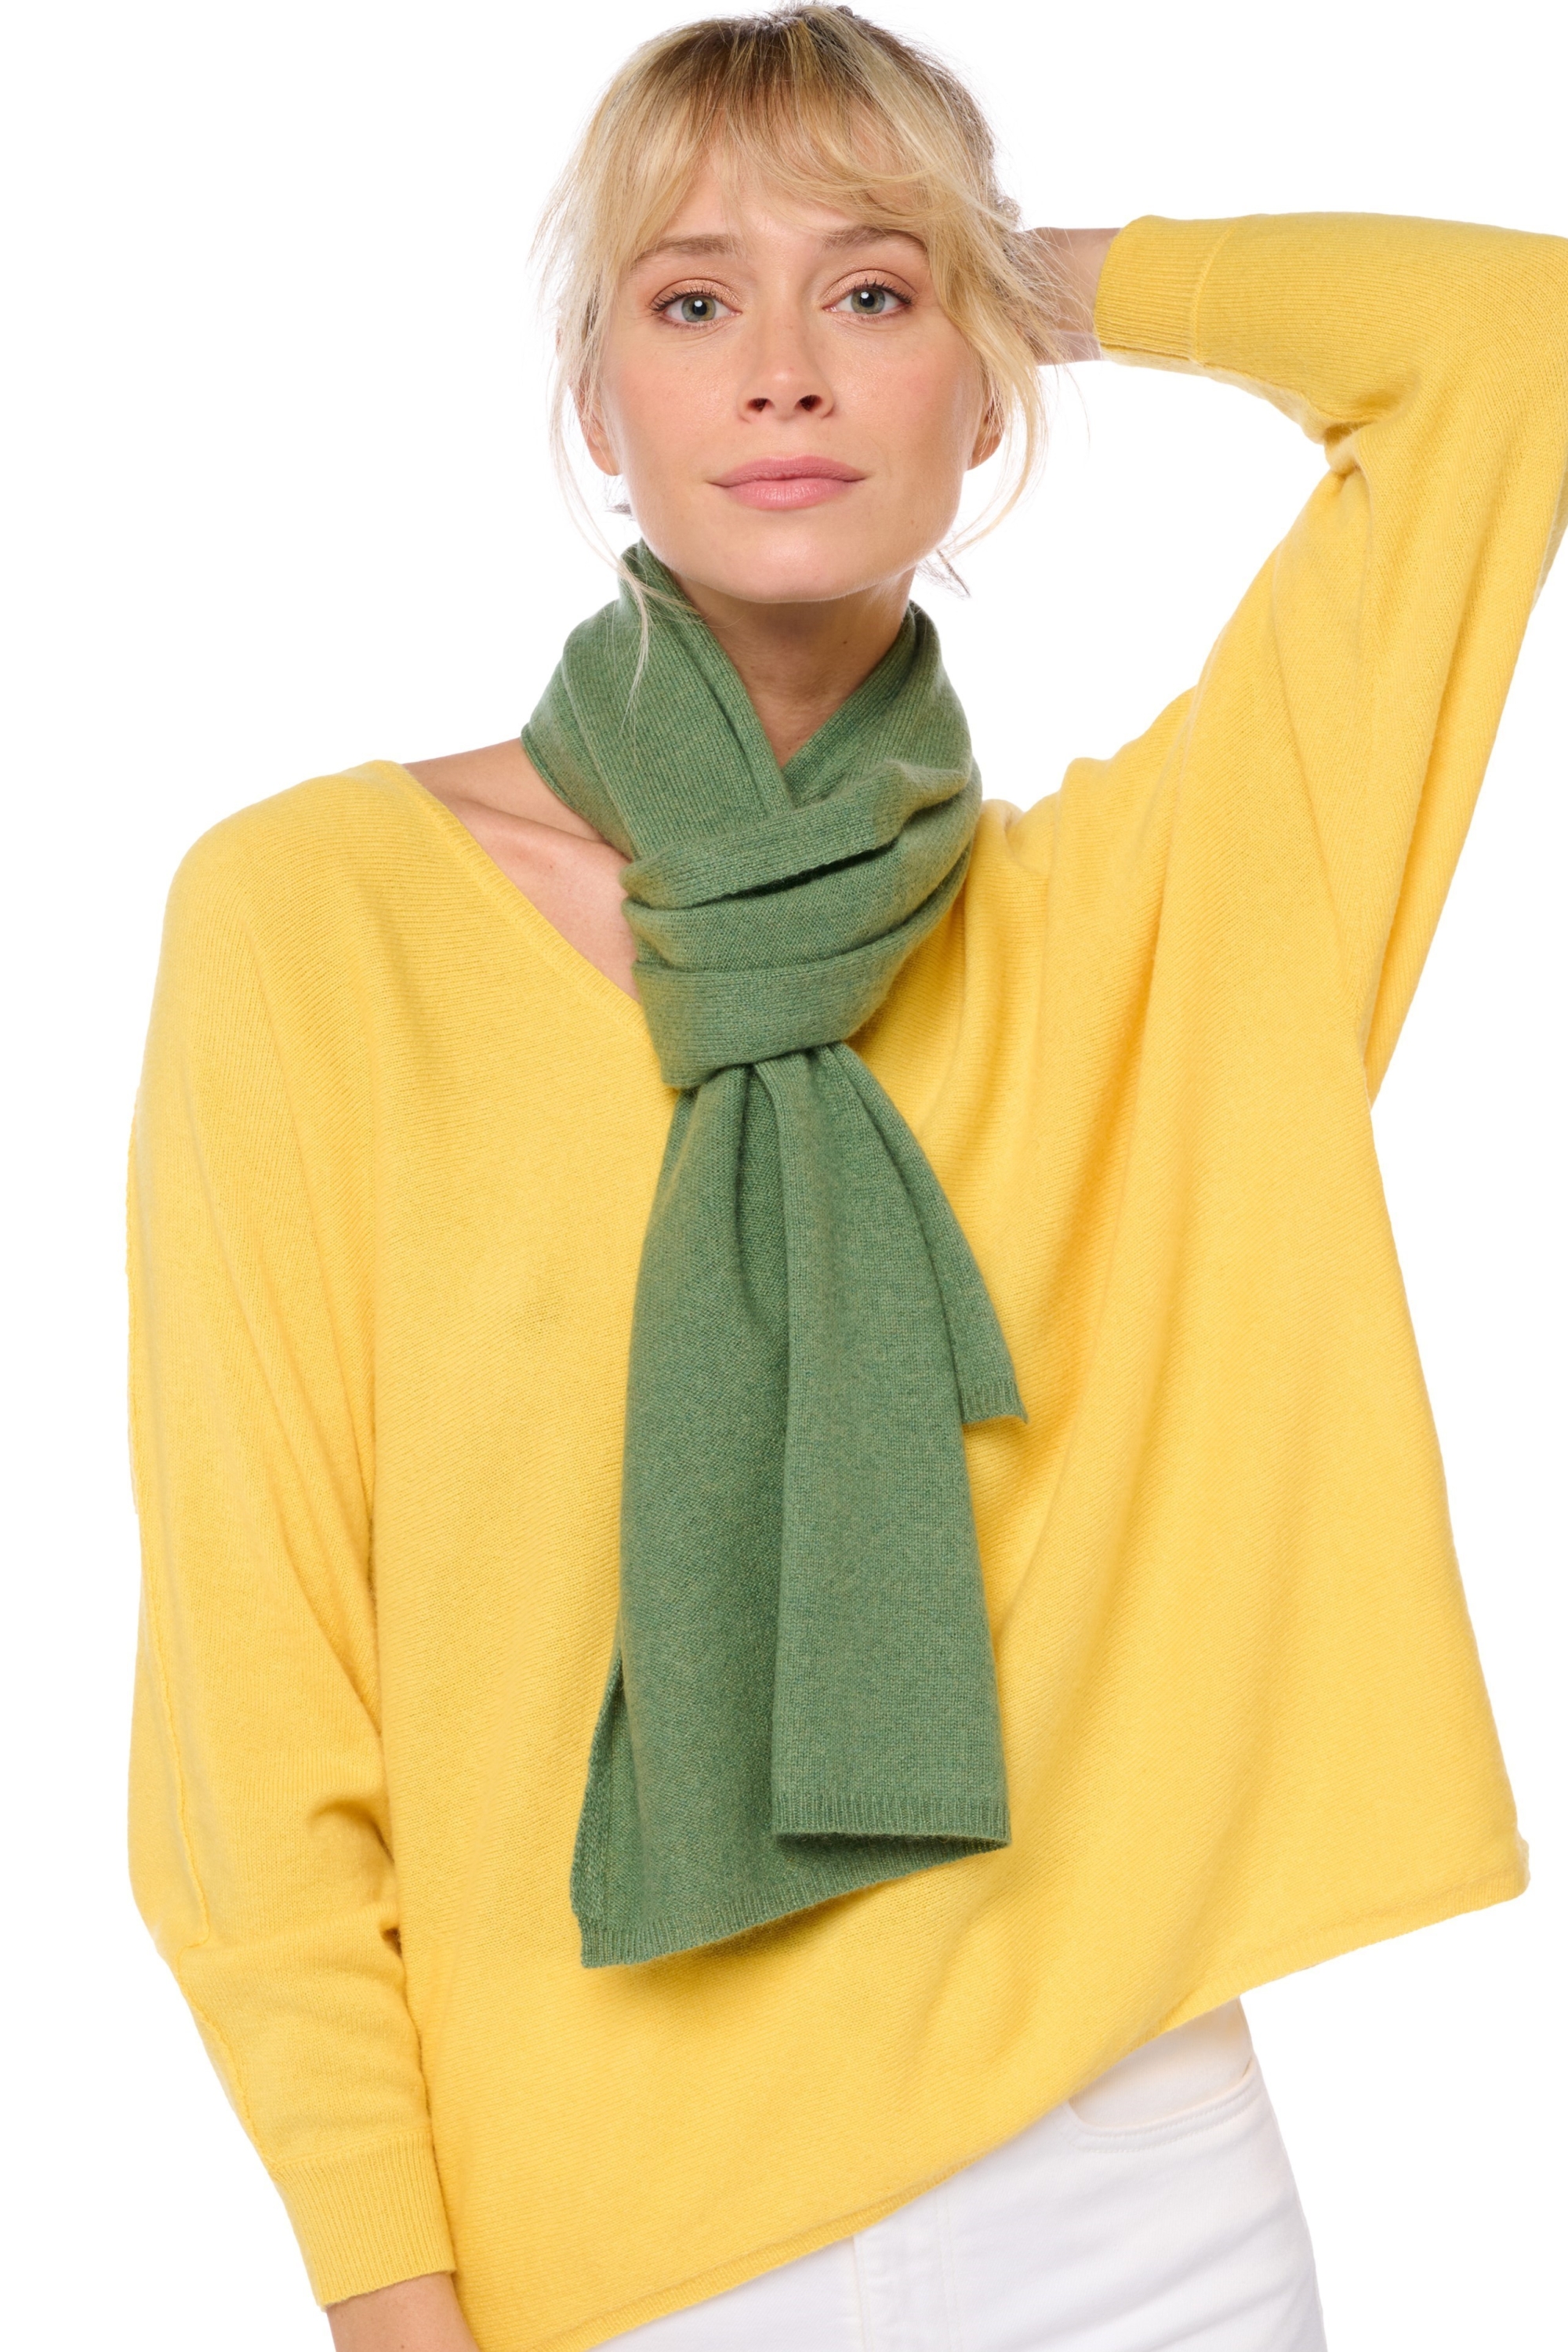 Cashmere accessories scarves mufflers ozone foliage 160 x 30 cm